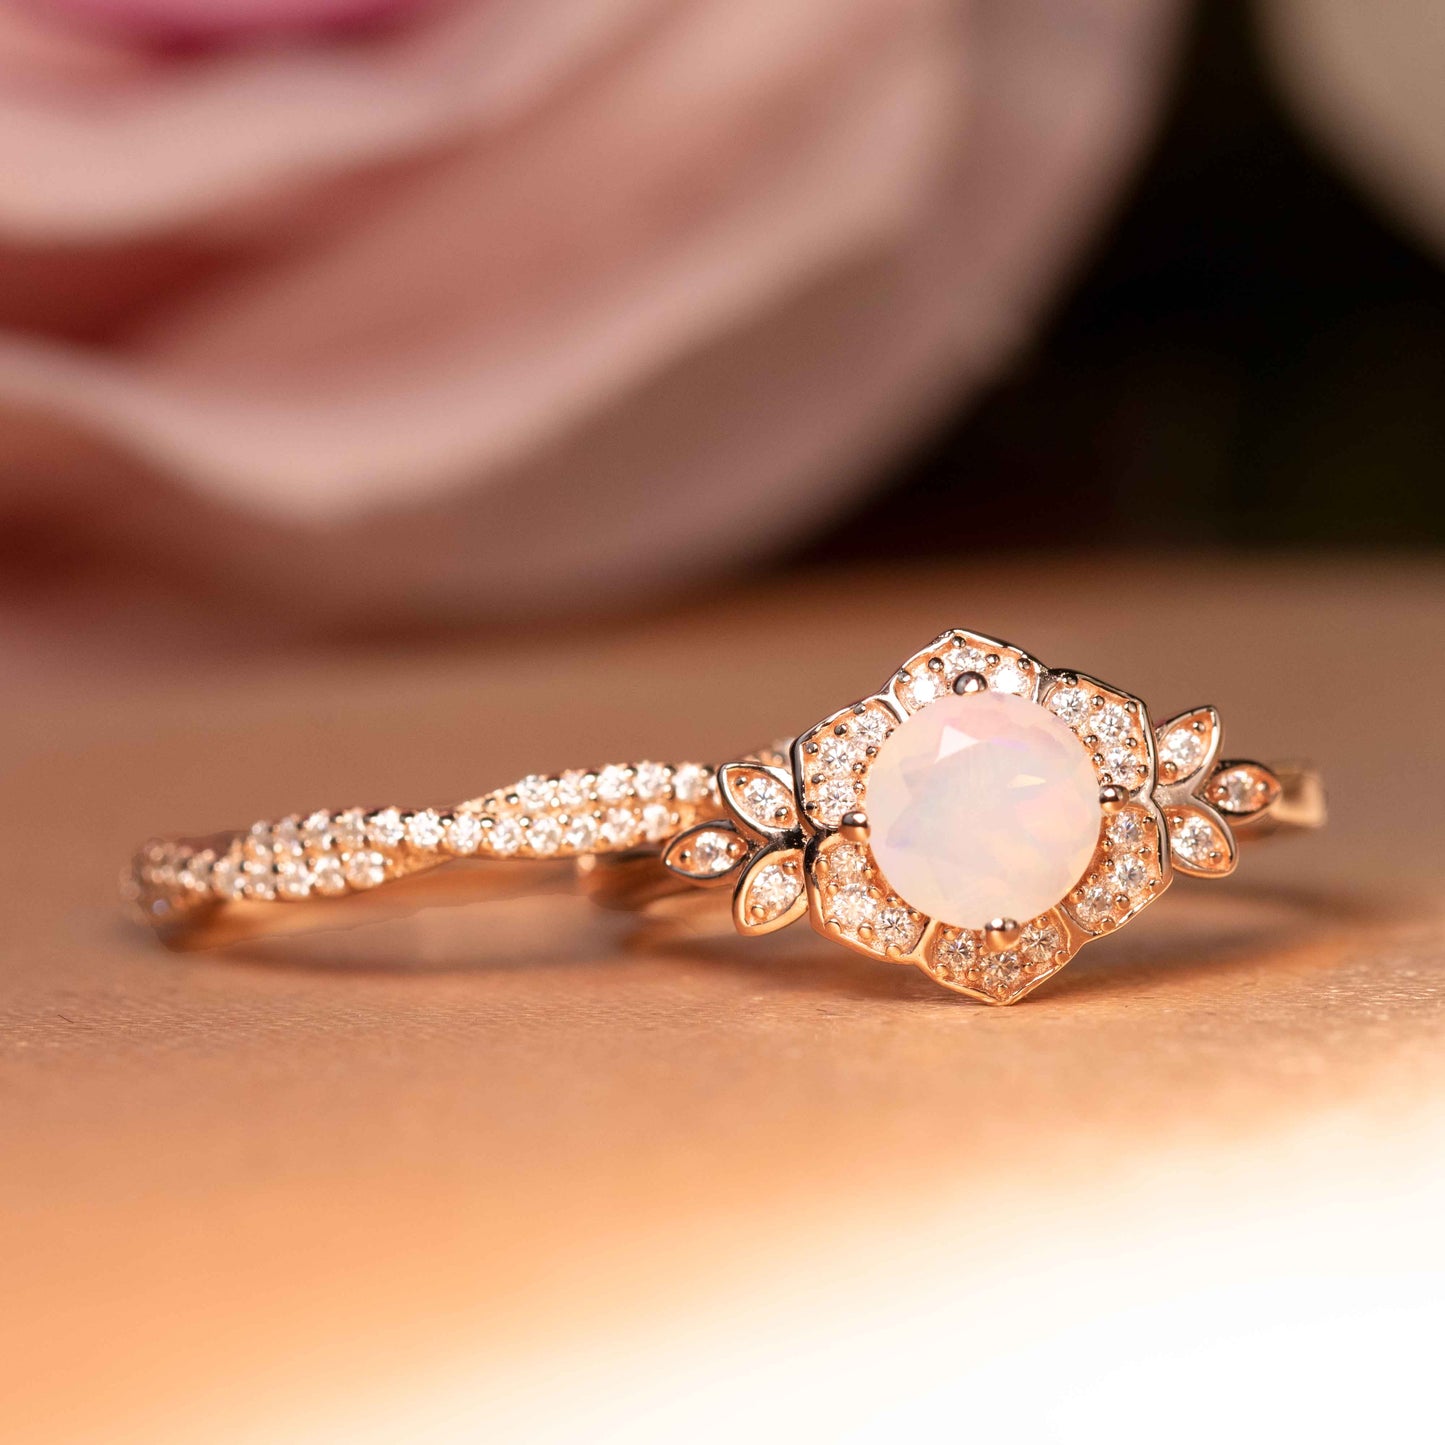 1.5 carat Flower Leaf design Fire Opal Bridal Wedding Ring Set with Diamond on Rose Gold